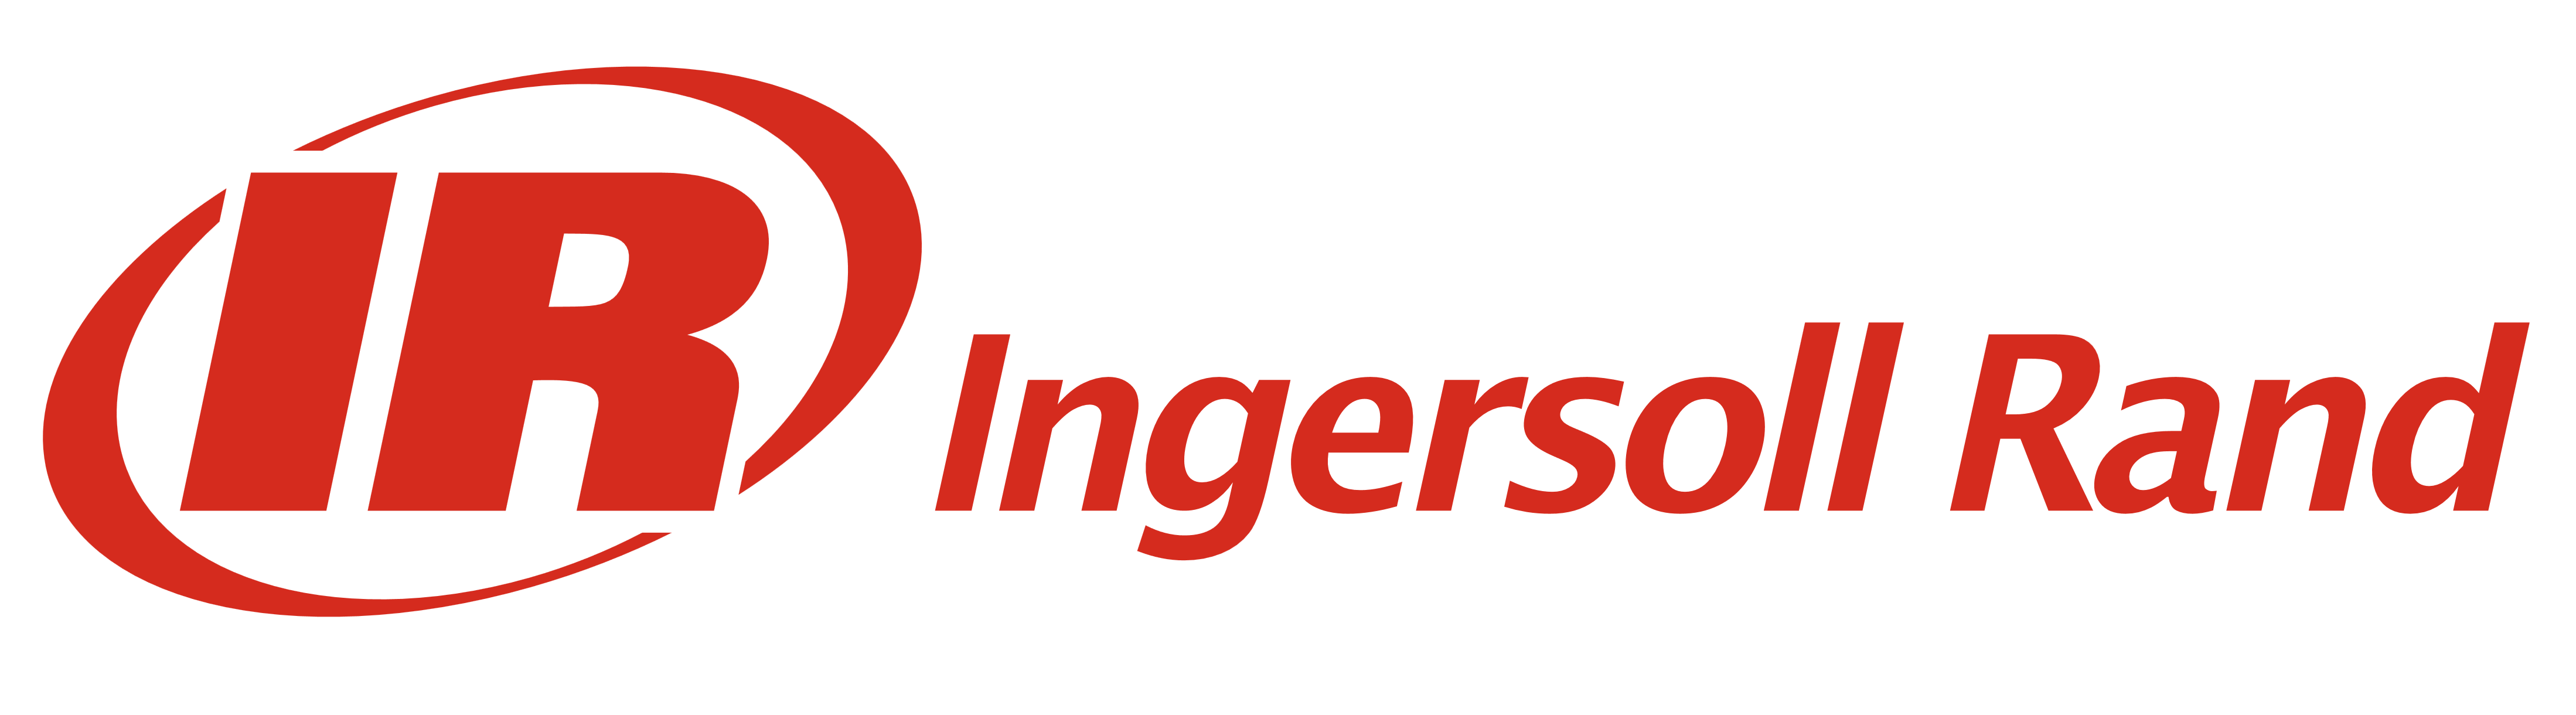 Ingersoll Rand logo, logotype